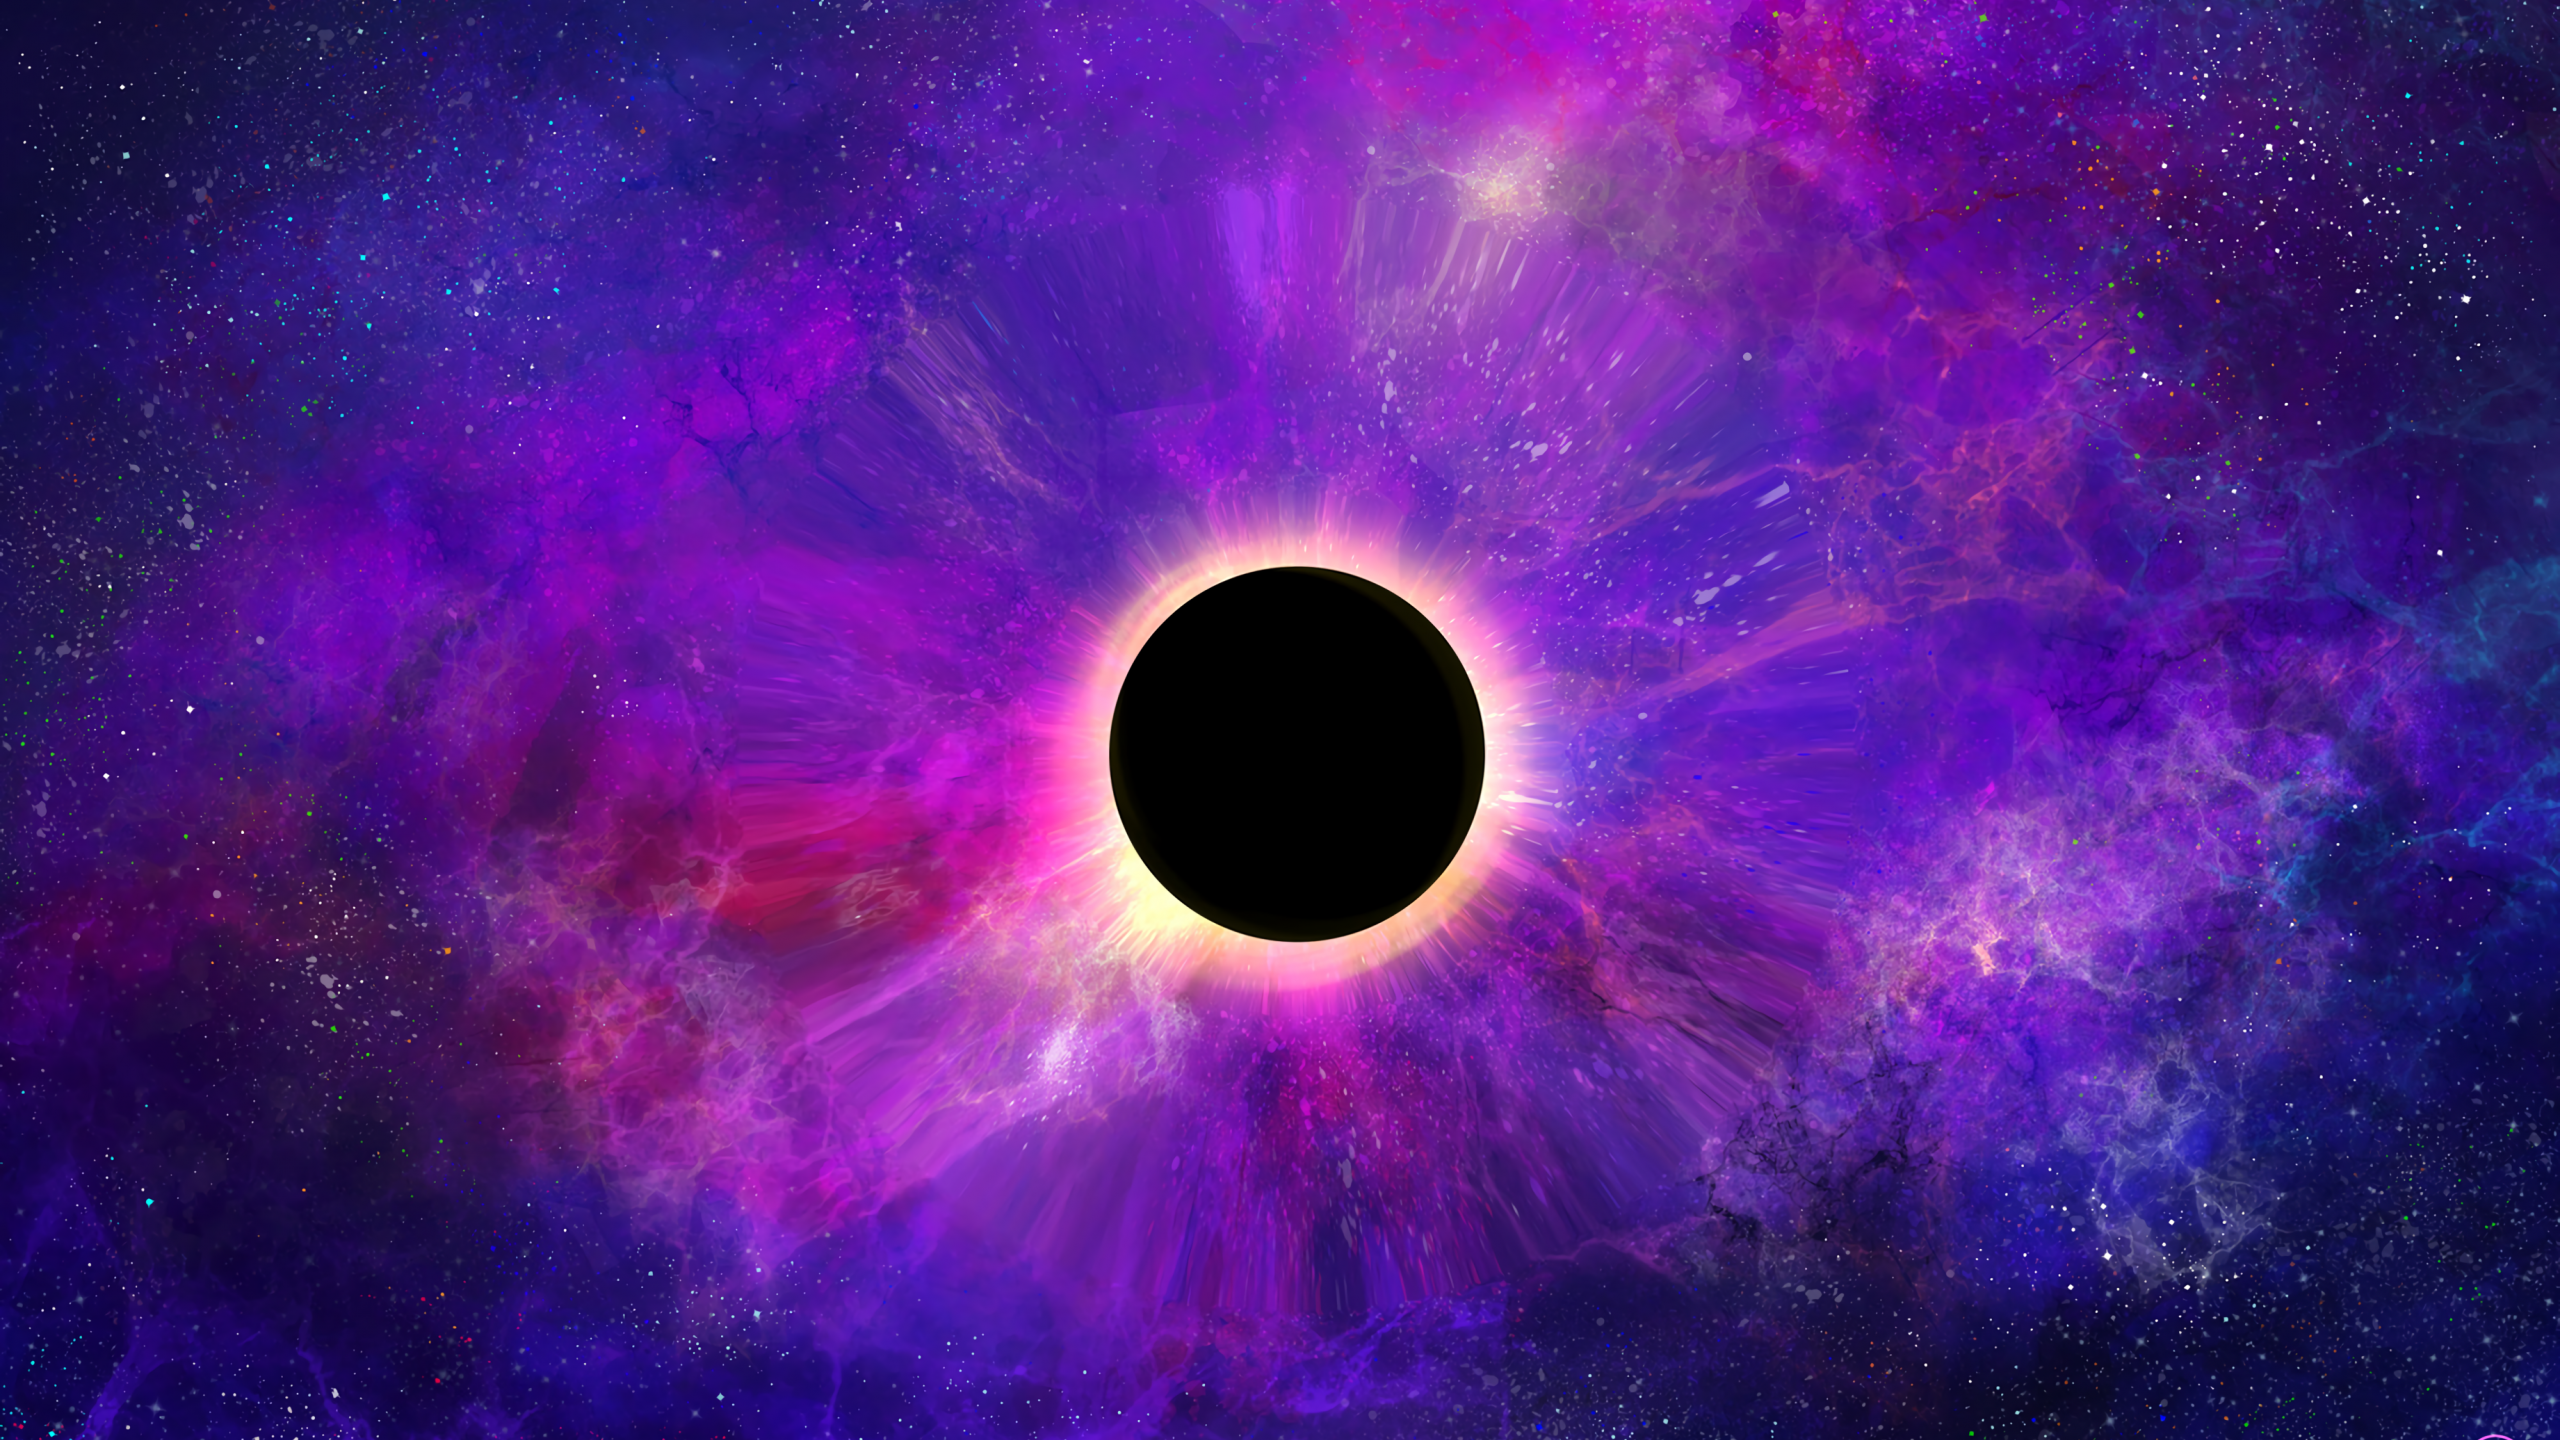 Black Hole Wallpaper 2560x1440 | Blangsak Wall